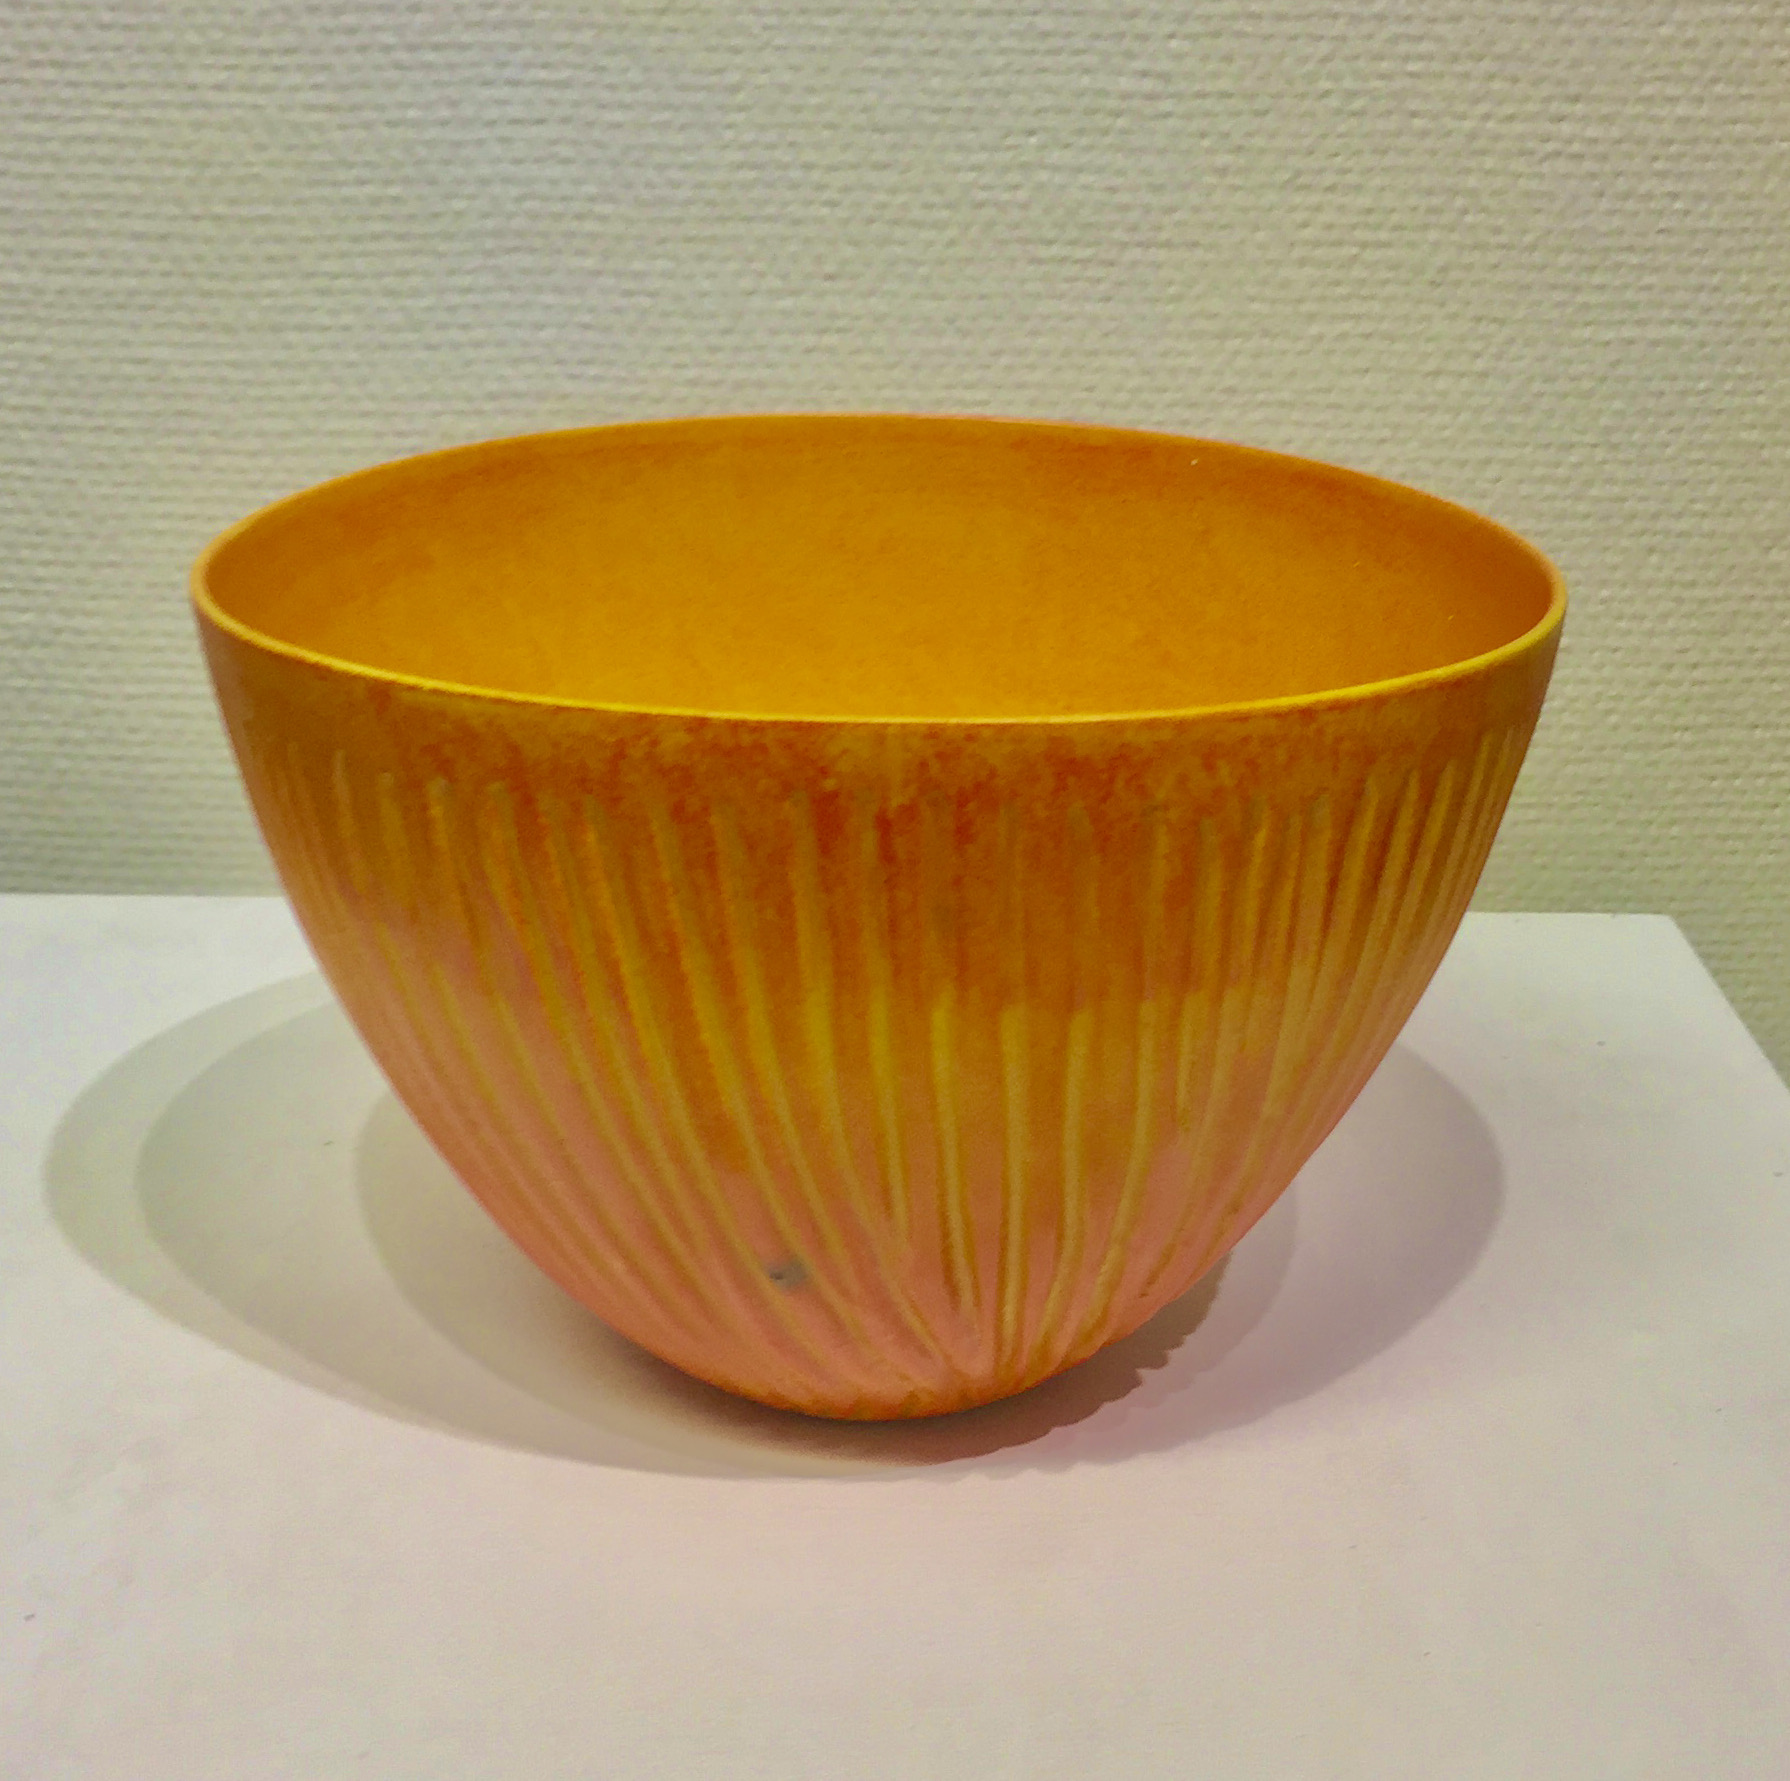 Per Hammarström - Porcelain bowl